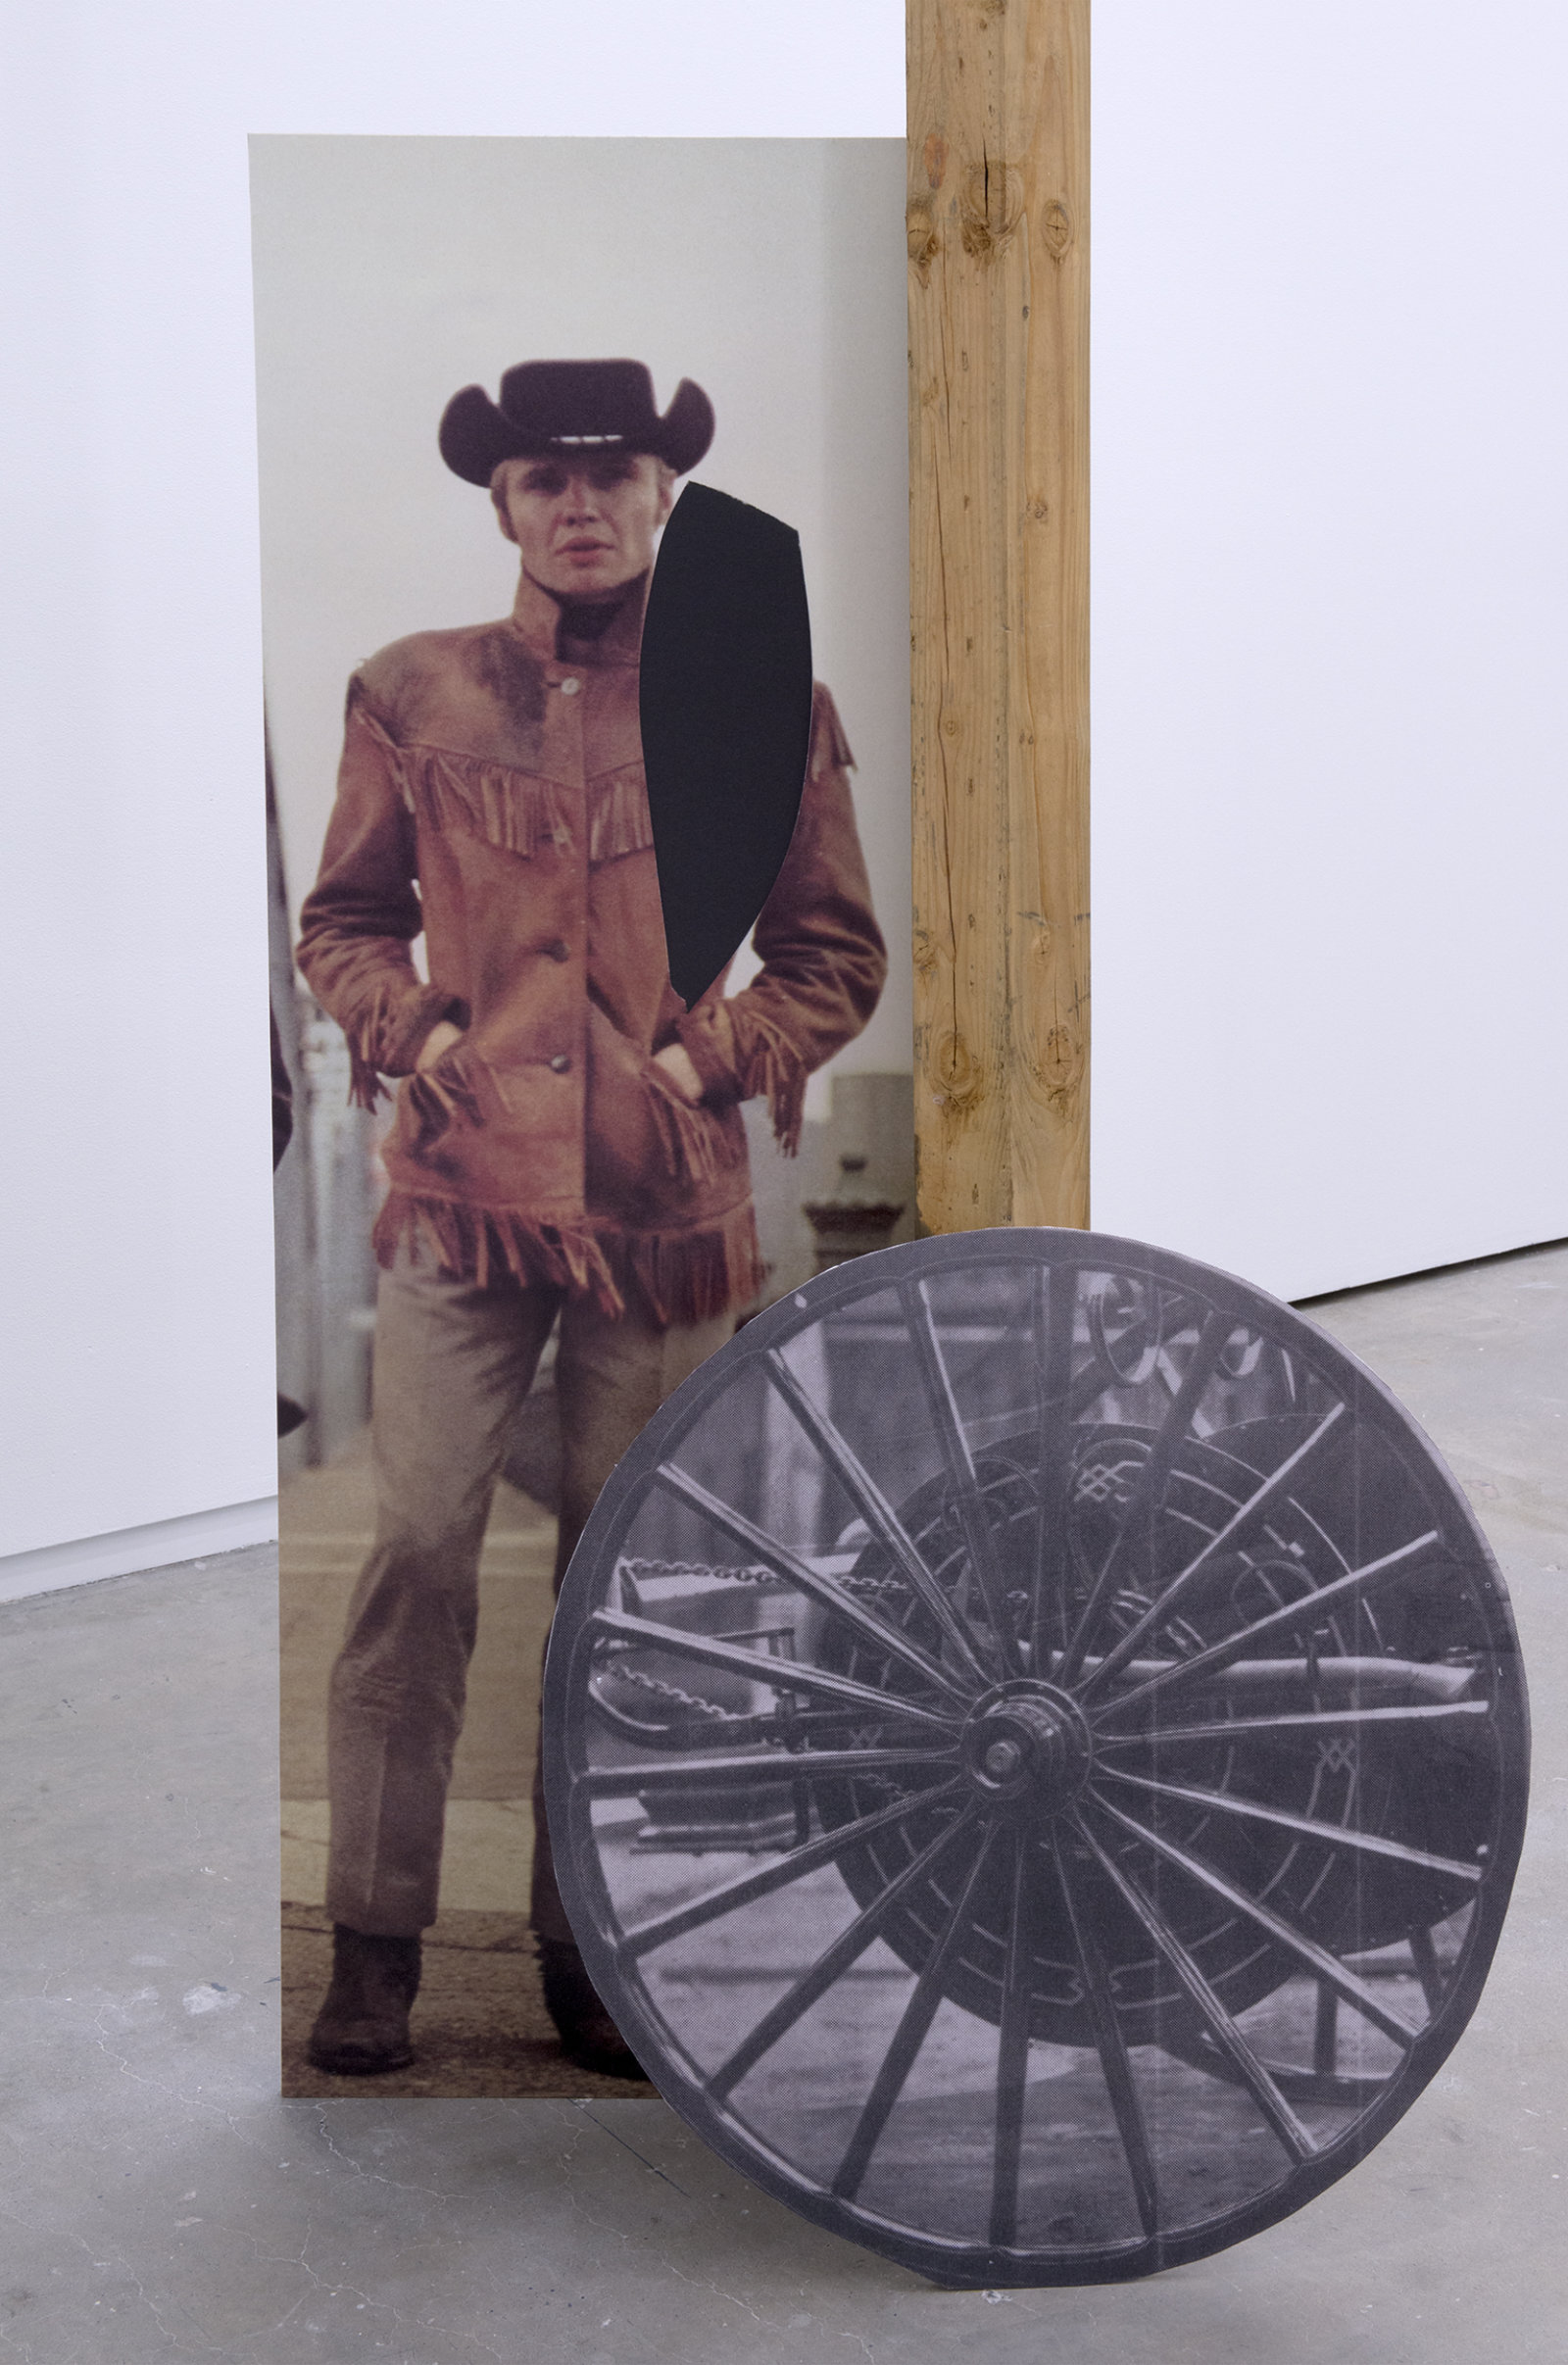 Geoffrey Farmer, Some kinds of sacrifice (detail), 2014, douglas fir pole, 6 photographs mounted on foamcore, 200 x 4 x 4 in. (508 x 9 x 9 cm)